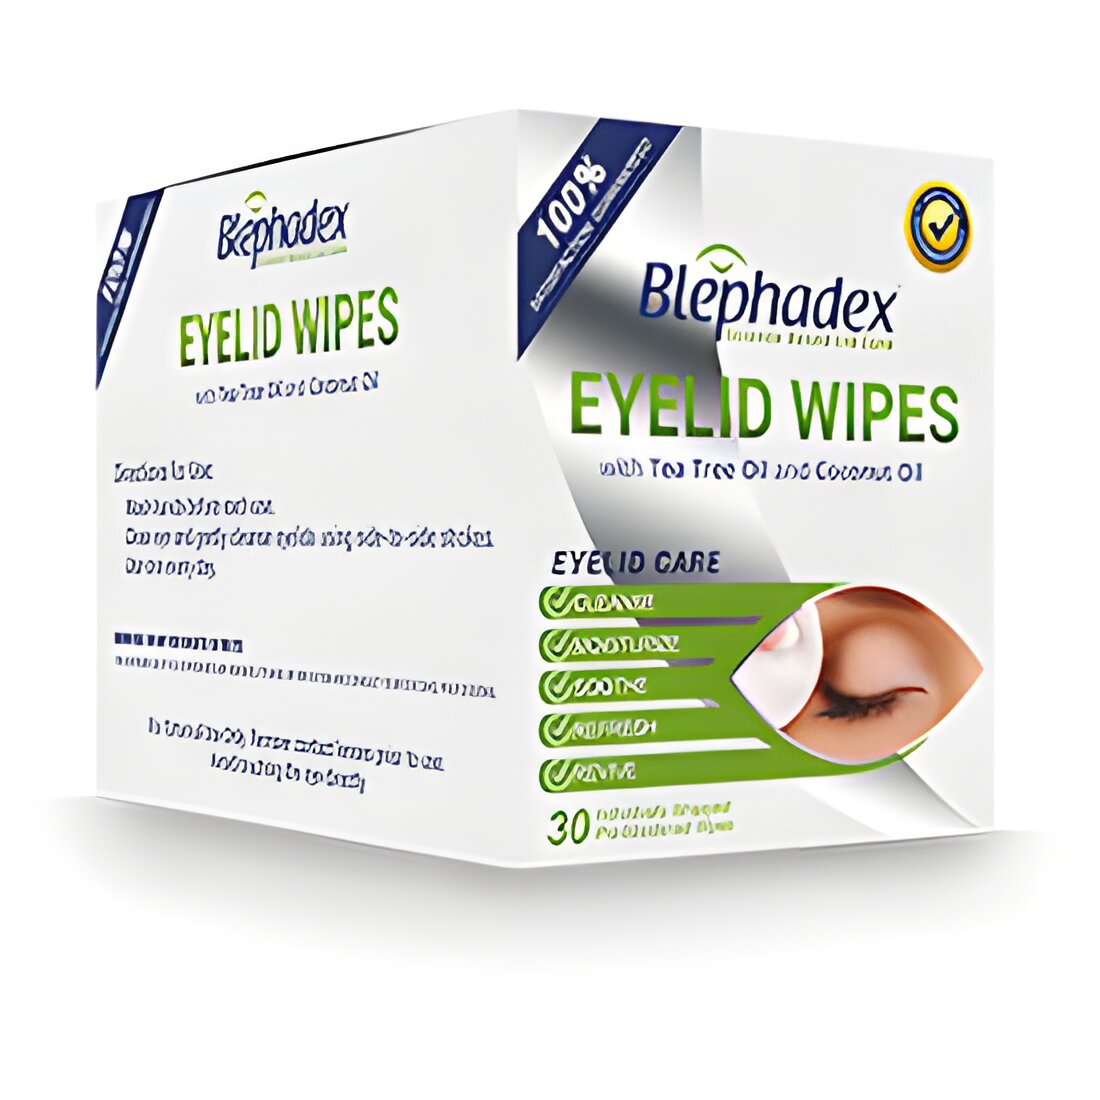 Free Blephadex Eyelid Wipes 30-Day Supply Coupon